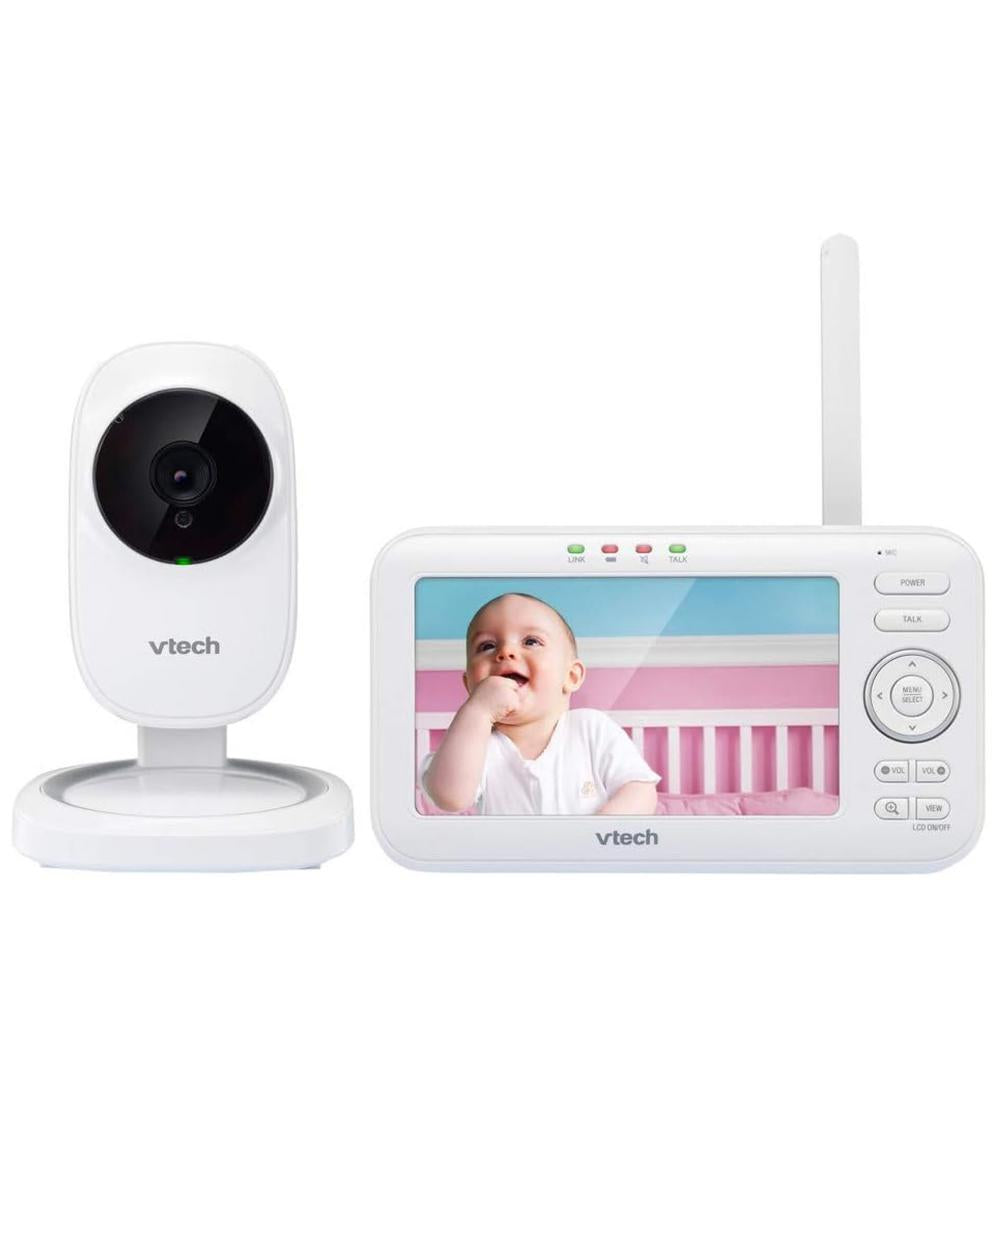 Vtech 5-inch Digital Video Full Color Baby Monitor